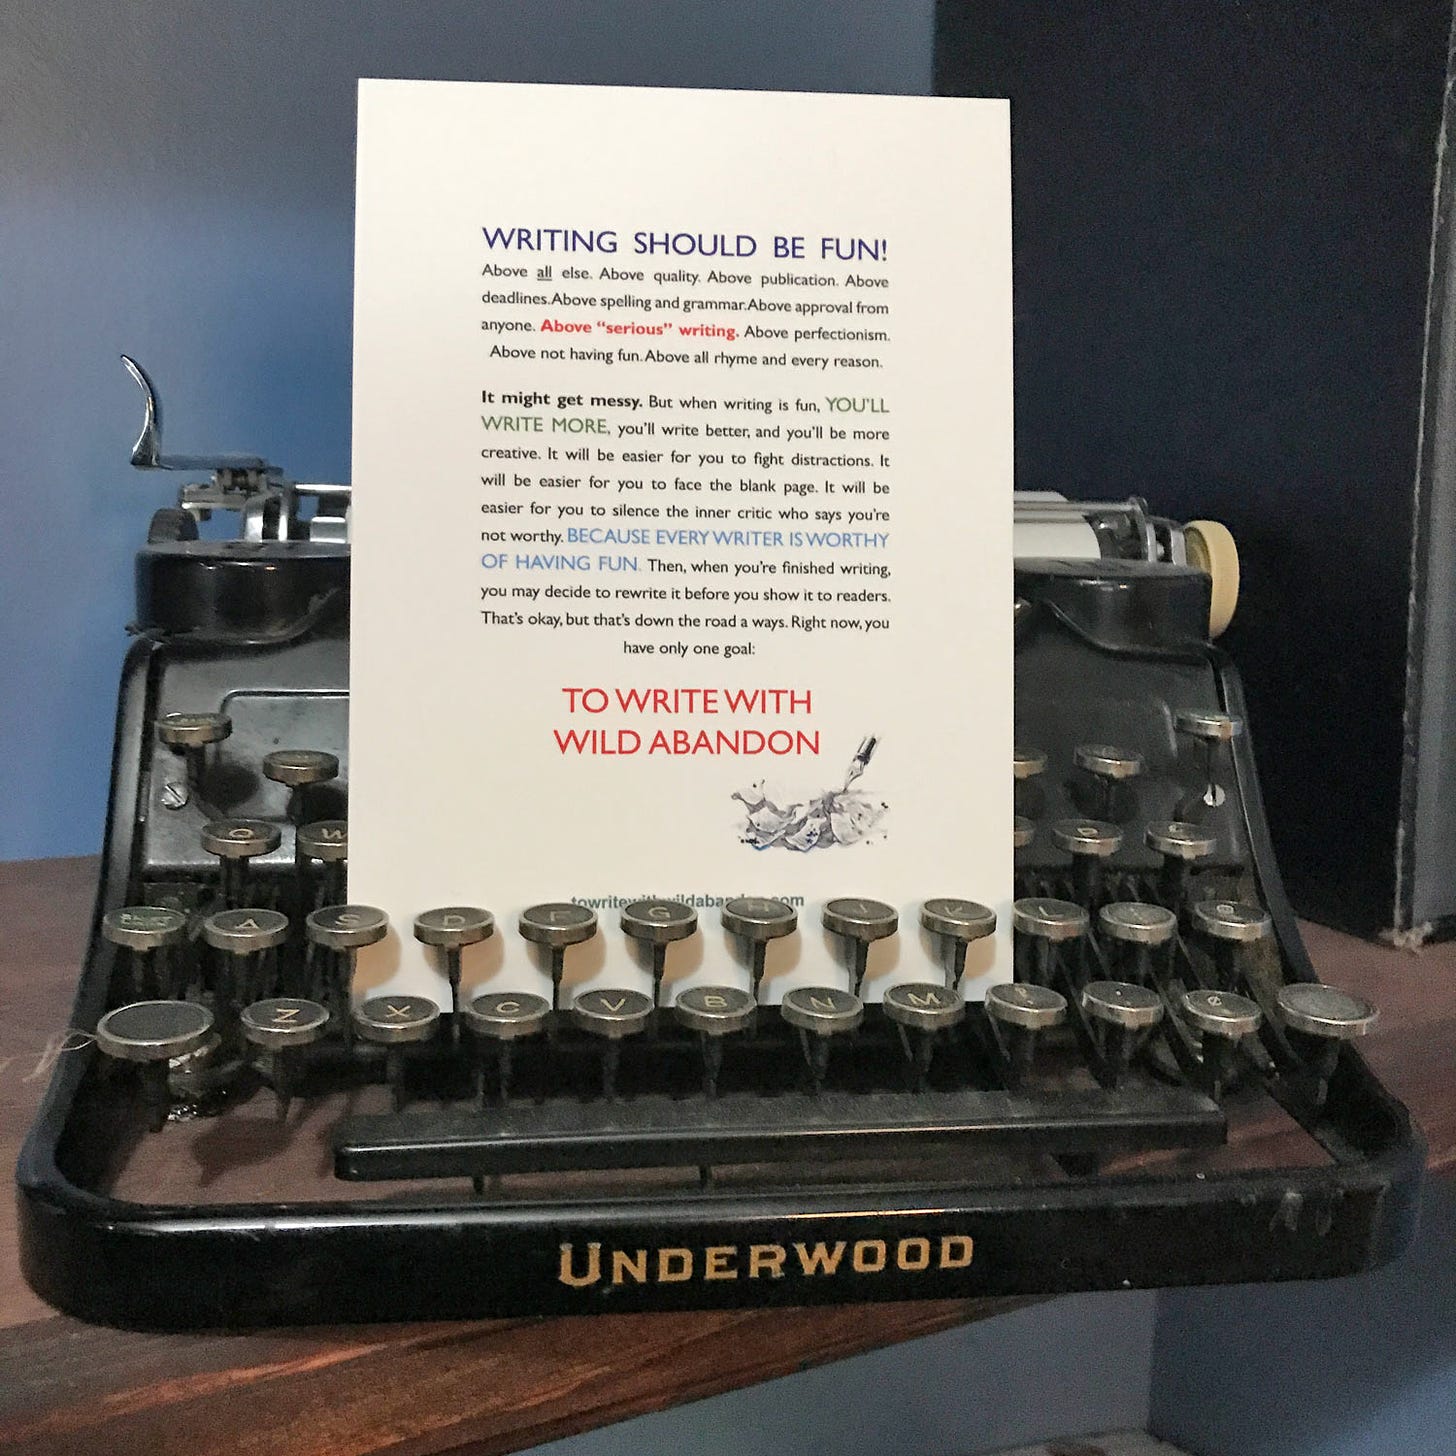 "To Write with Wild Abandon" postcard on an Underwood typewriter.